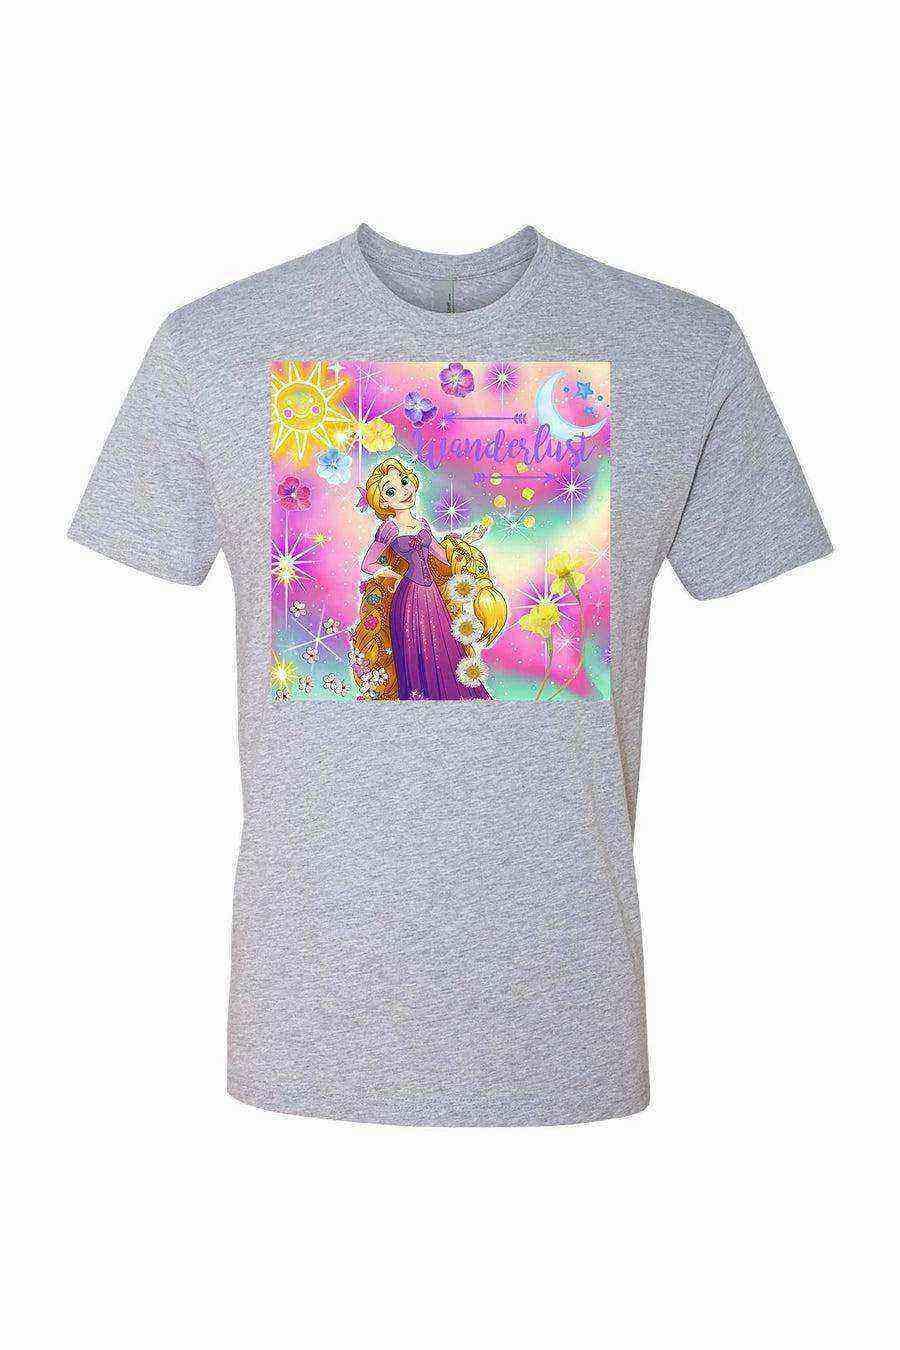 Tangled Shirt | Rapunzel Shirt - Dylan's Tees